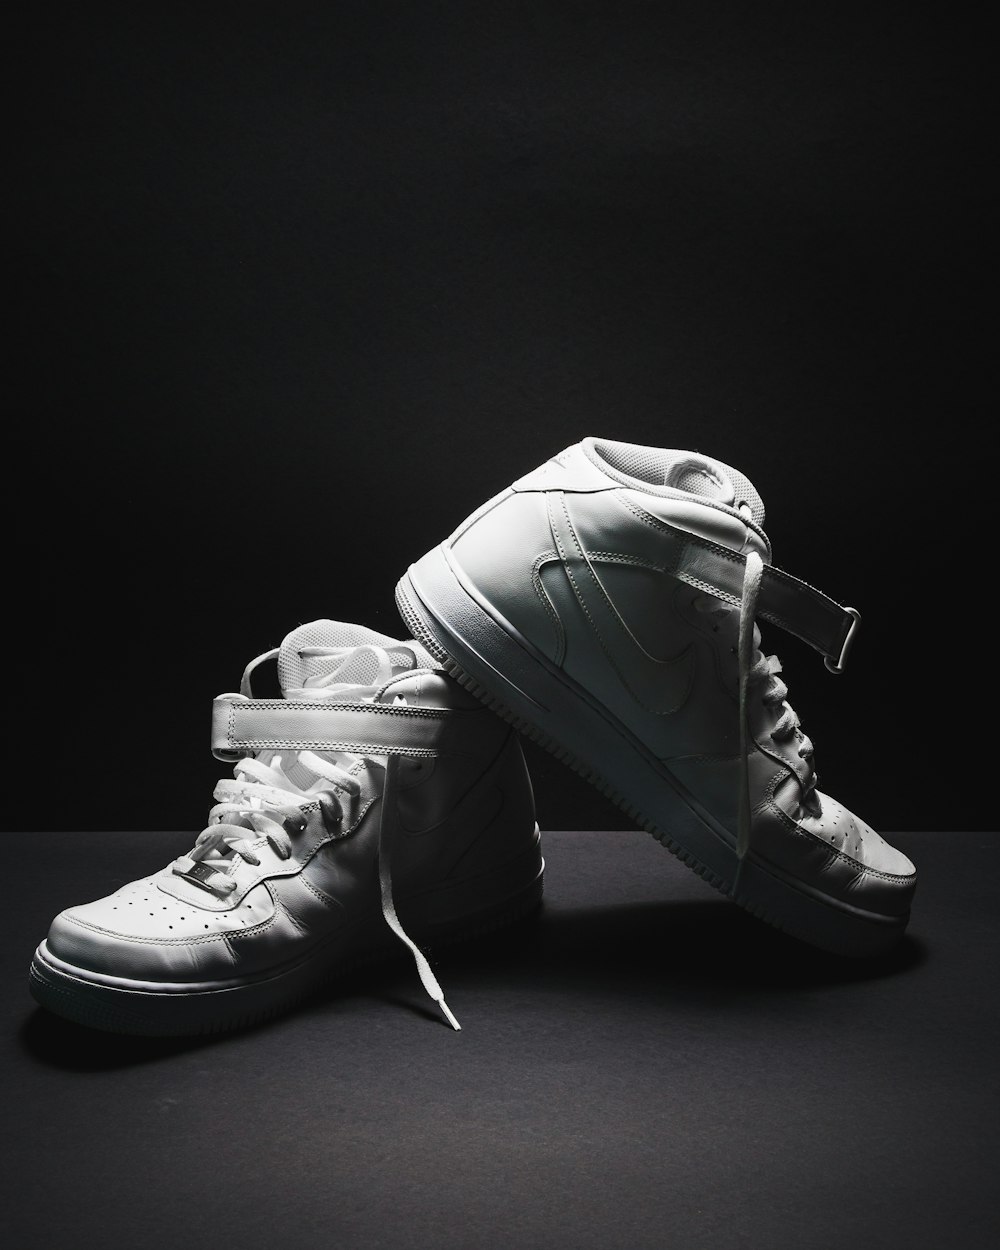 pair of white Nike Air Force 1 sneakers